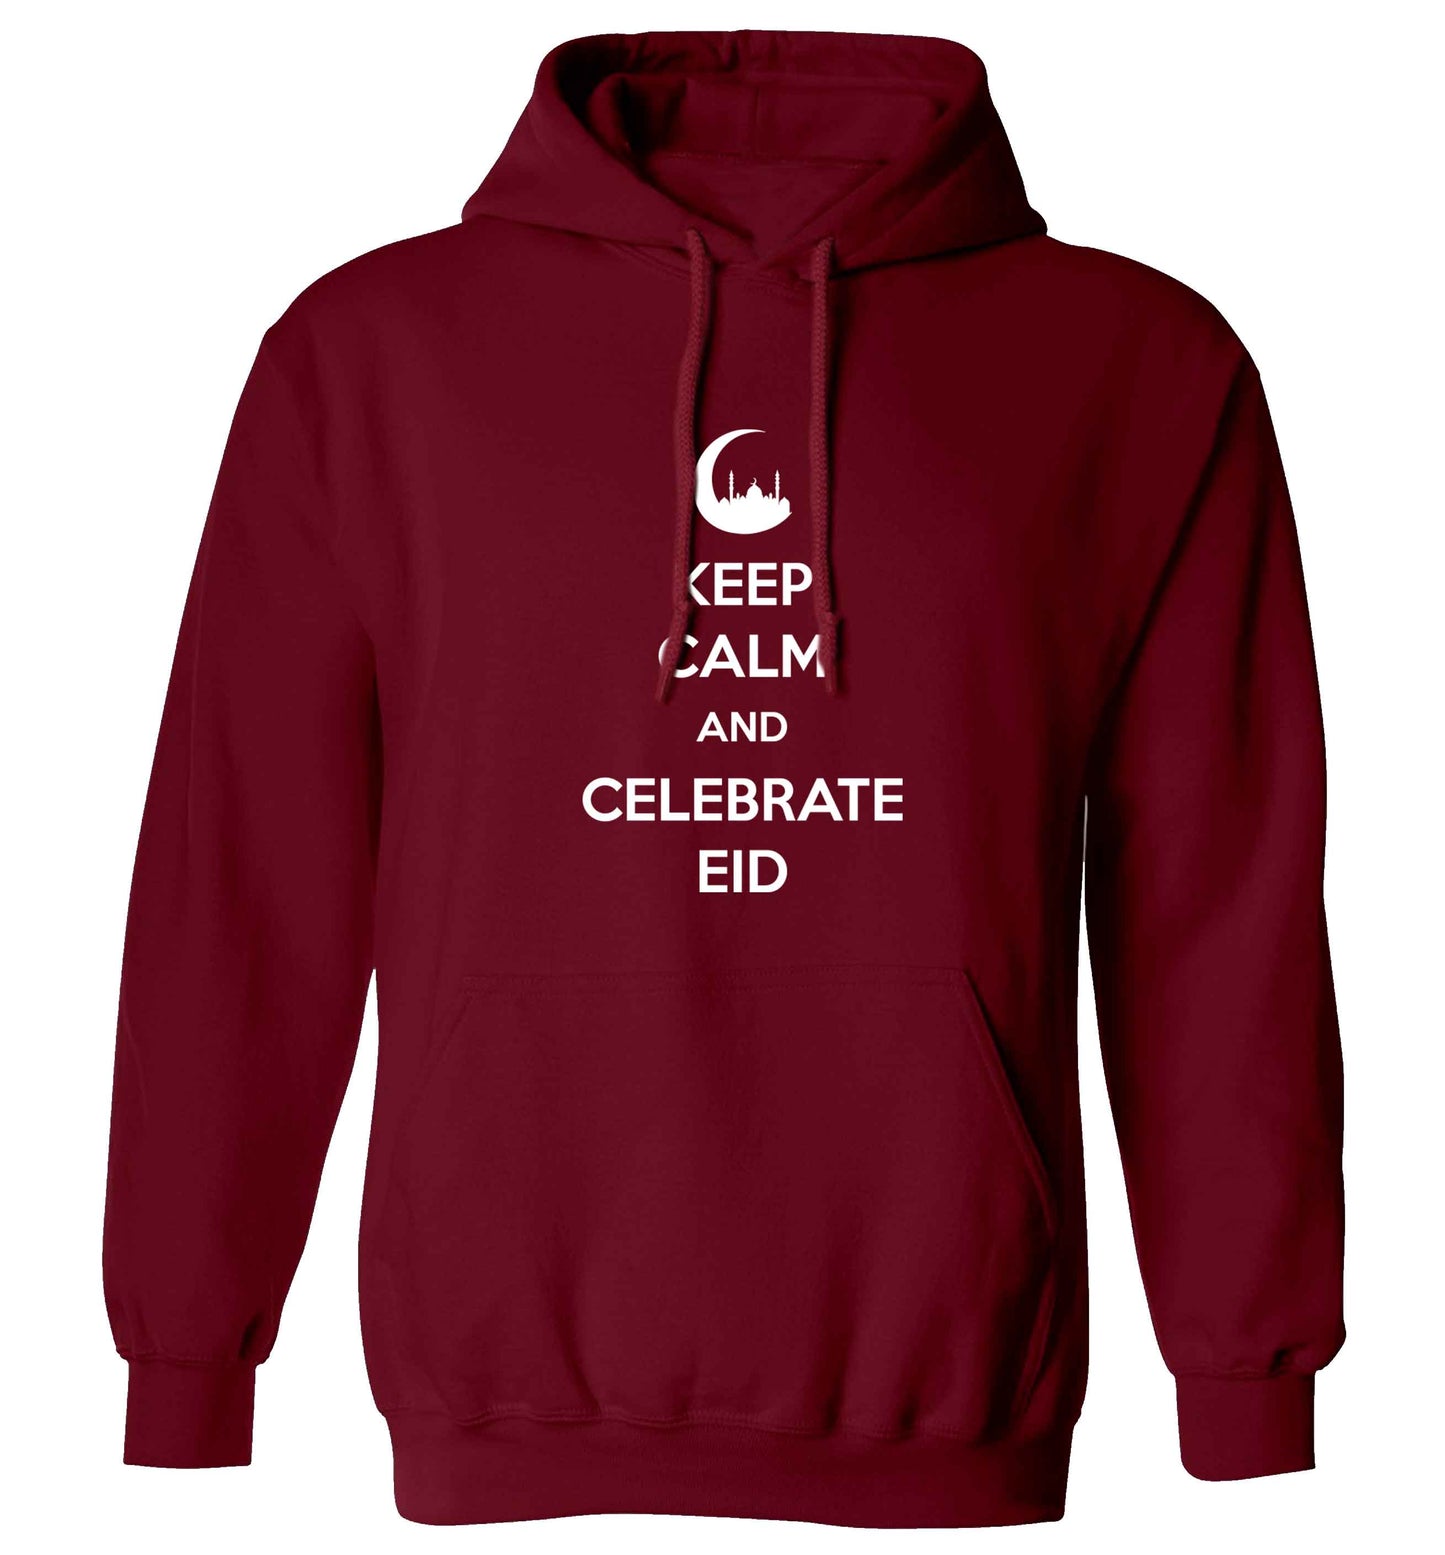 Keep calm and celebrate Eid adults unisex maroon hoodie 2XL